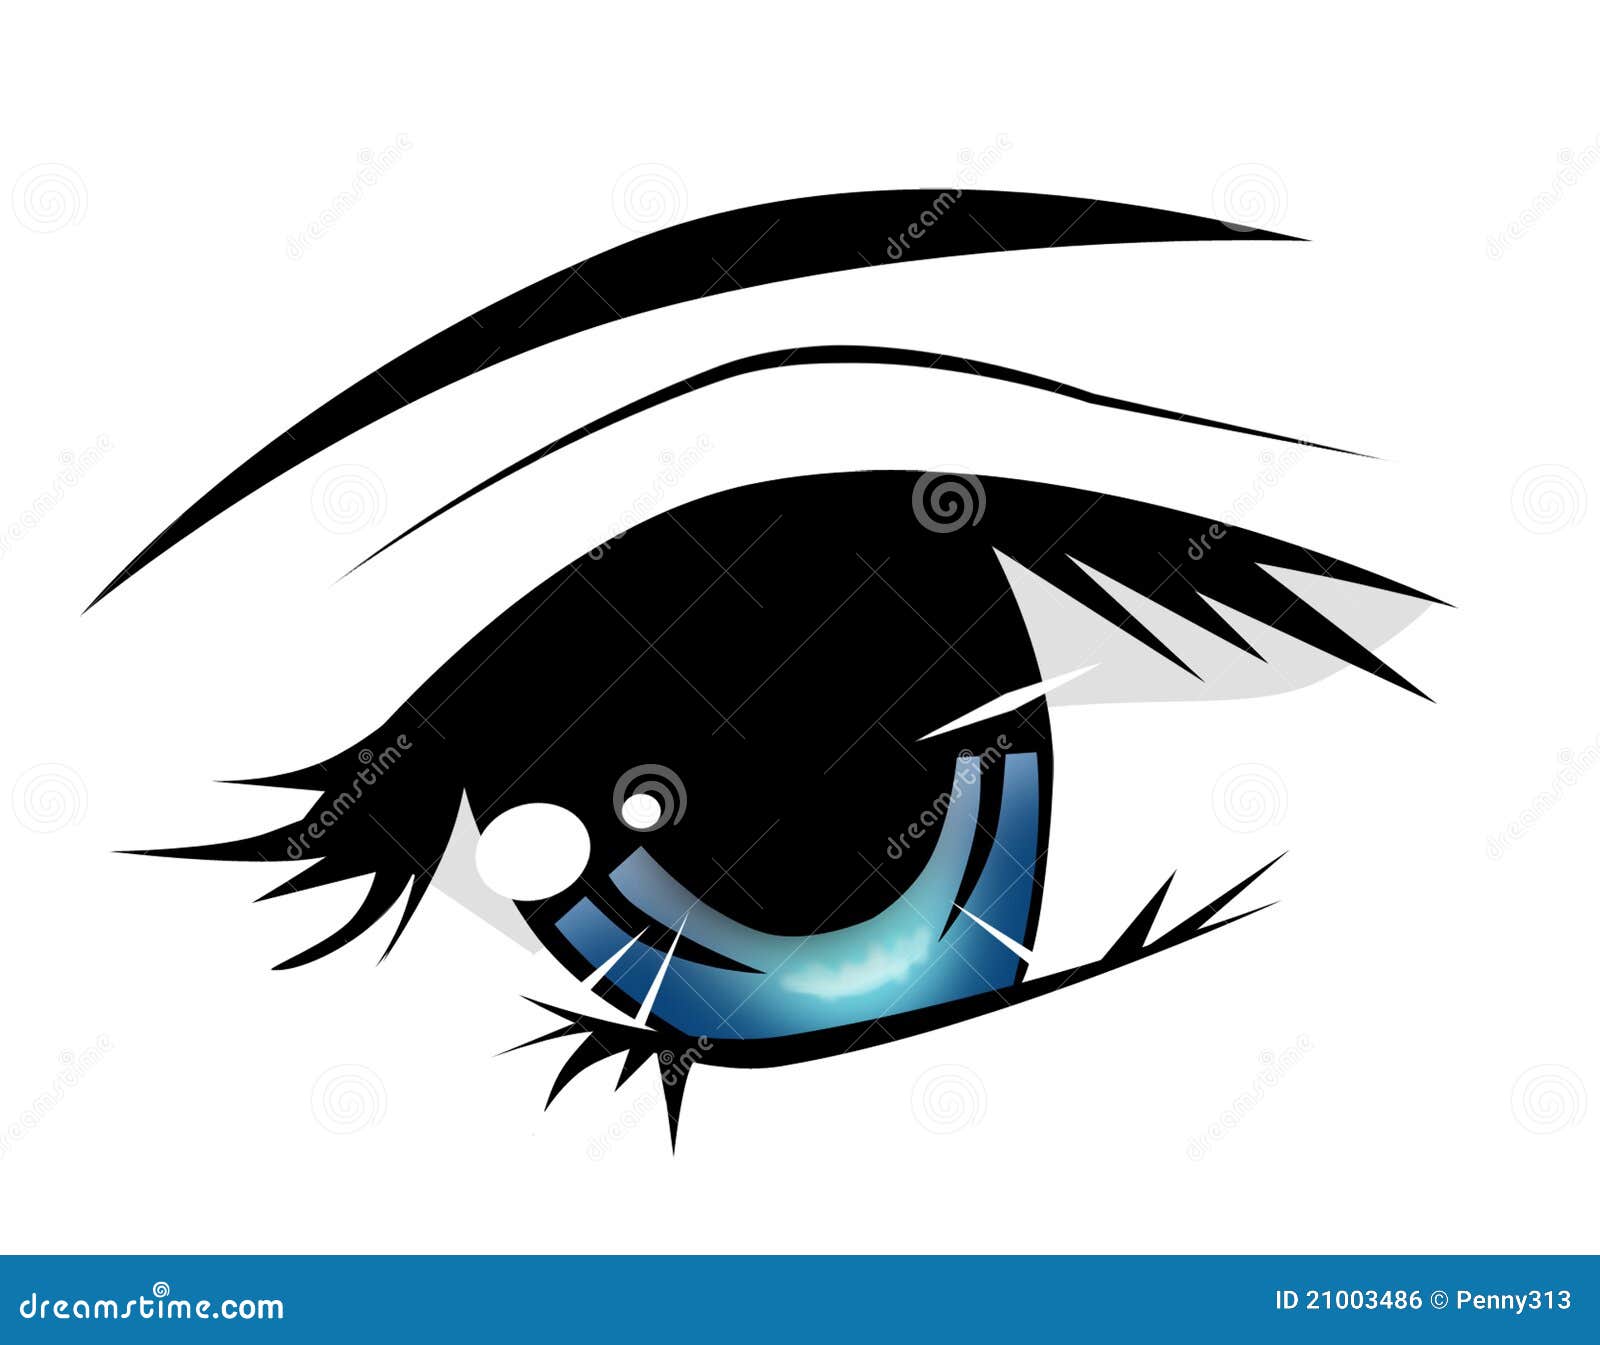 Anime eye stock illustration. Illustration of blue, cartoon - 21003486